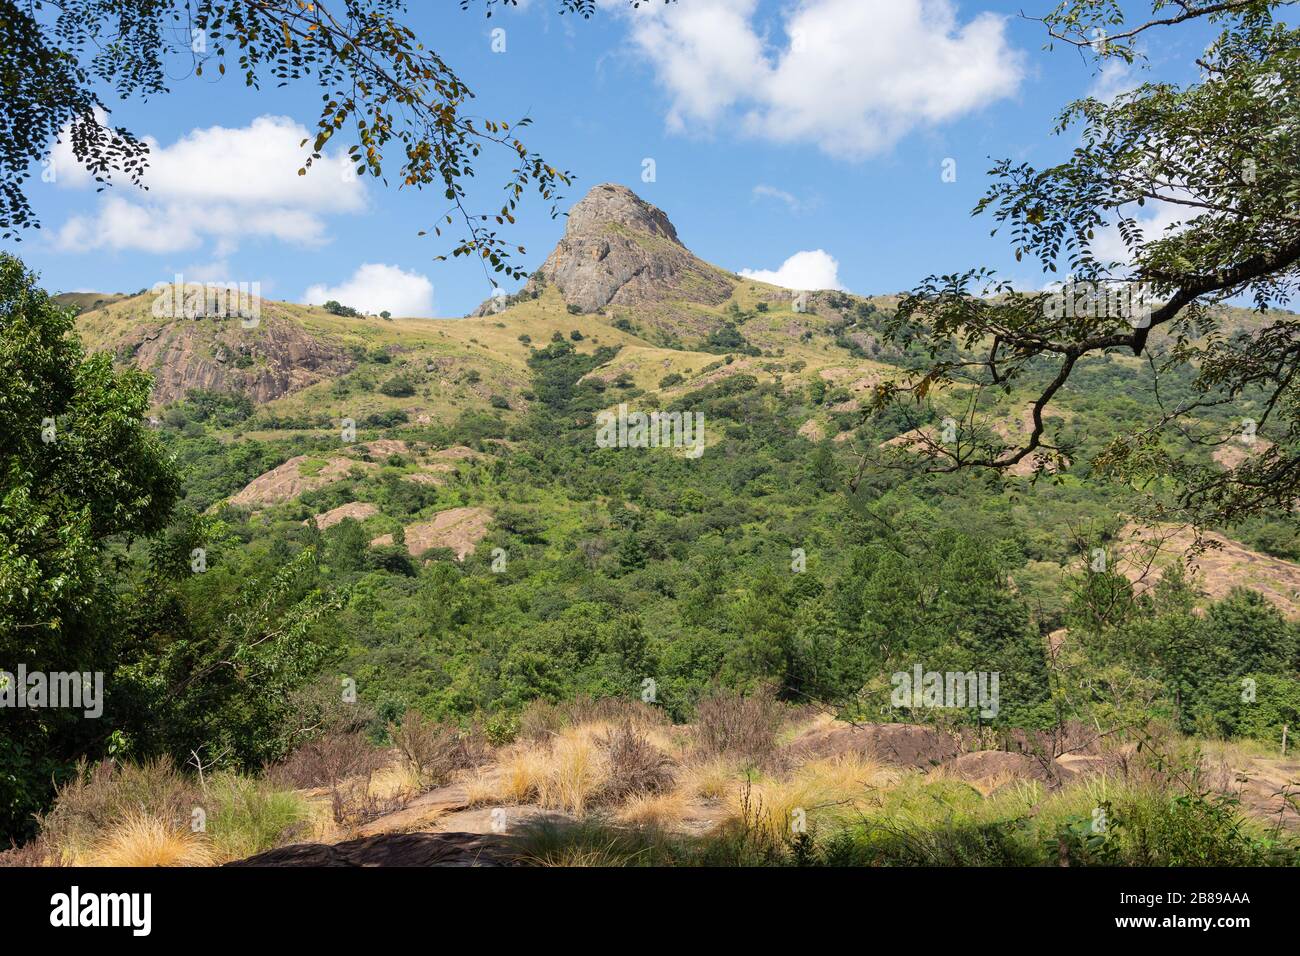 Mountain landscape at Mantenga Nature Reserve, Lobamba, Ezulwini Valley, Hhohho Region, Kingdom of Eswatini (Swaziland) Stock Photo